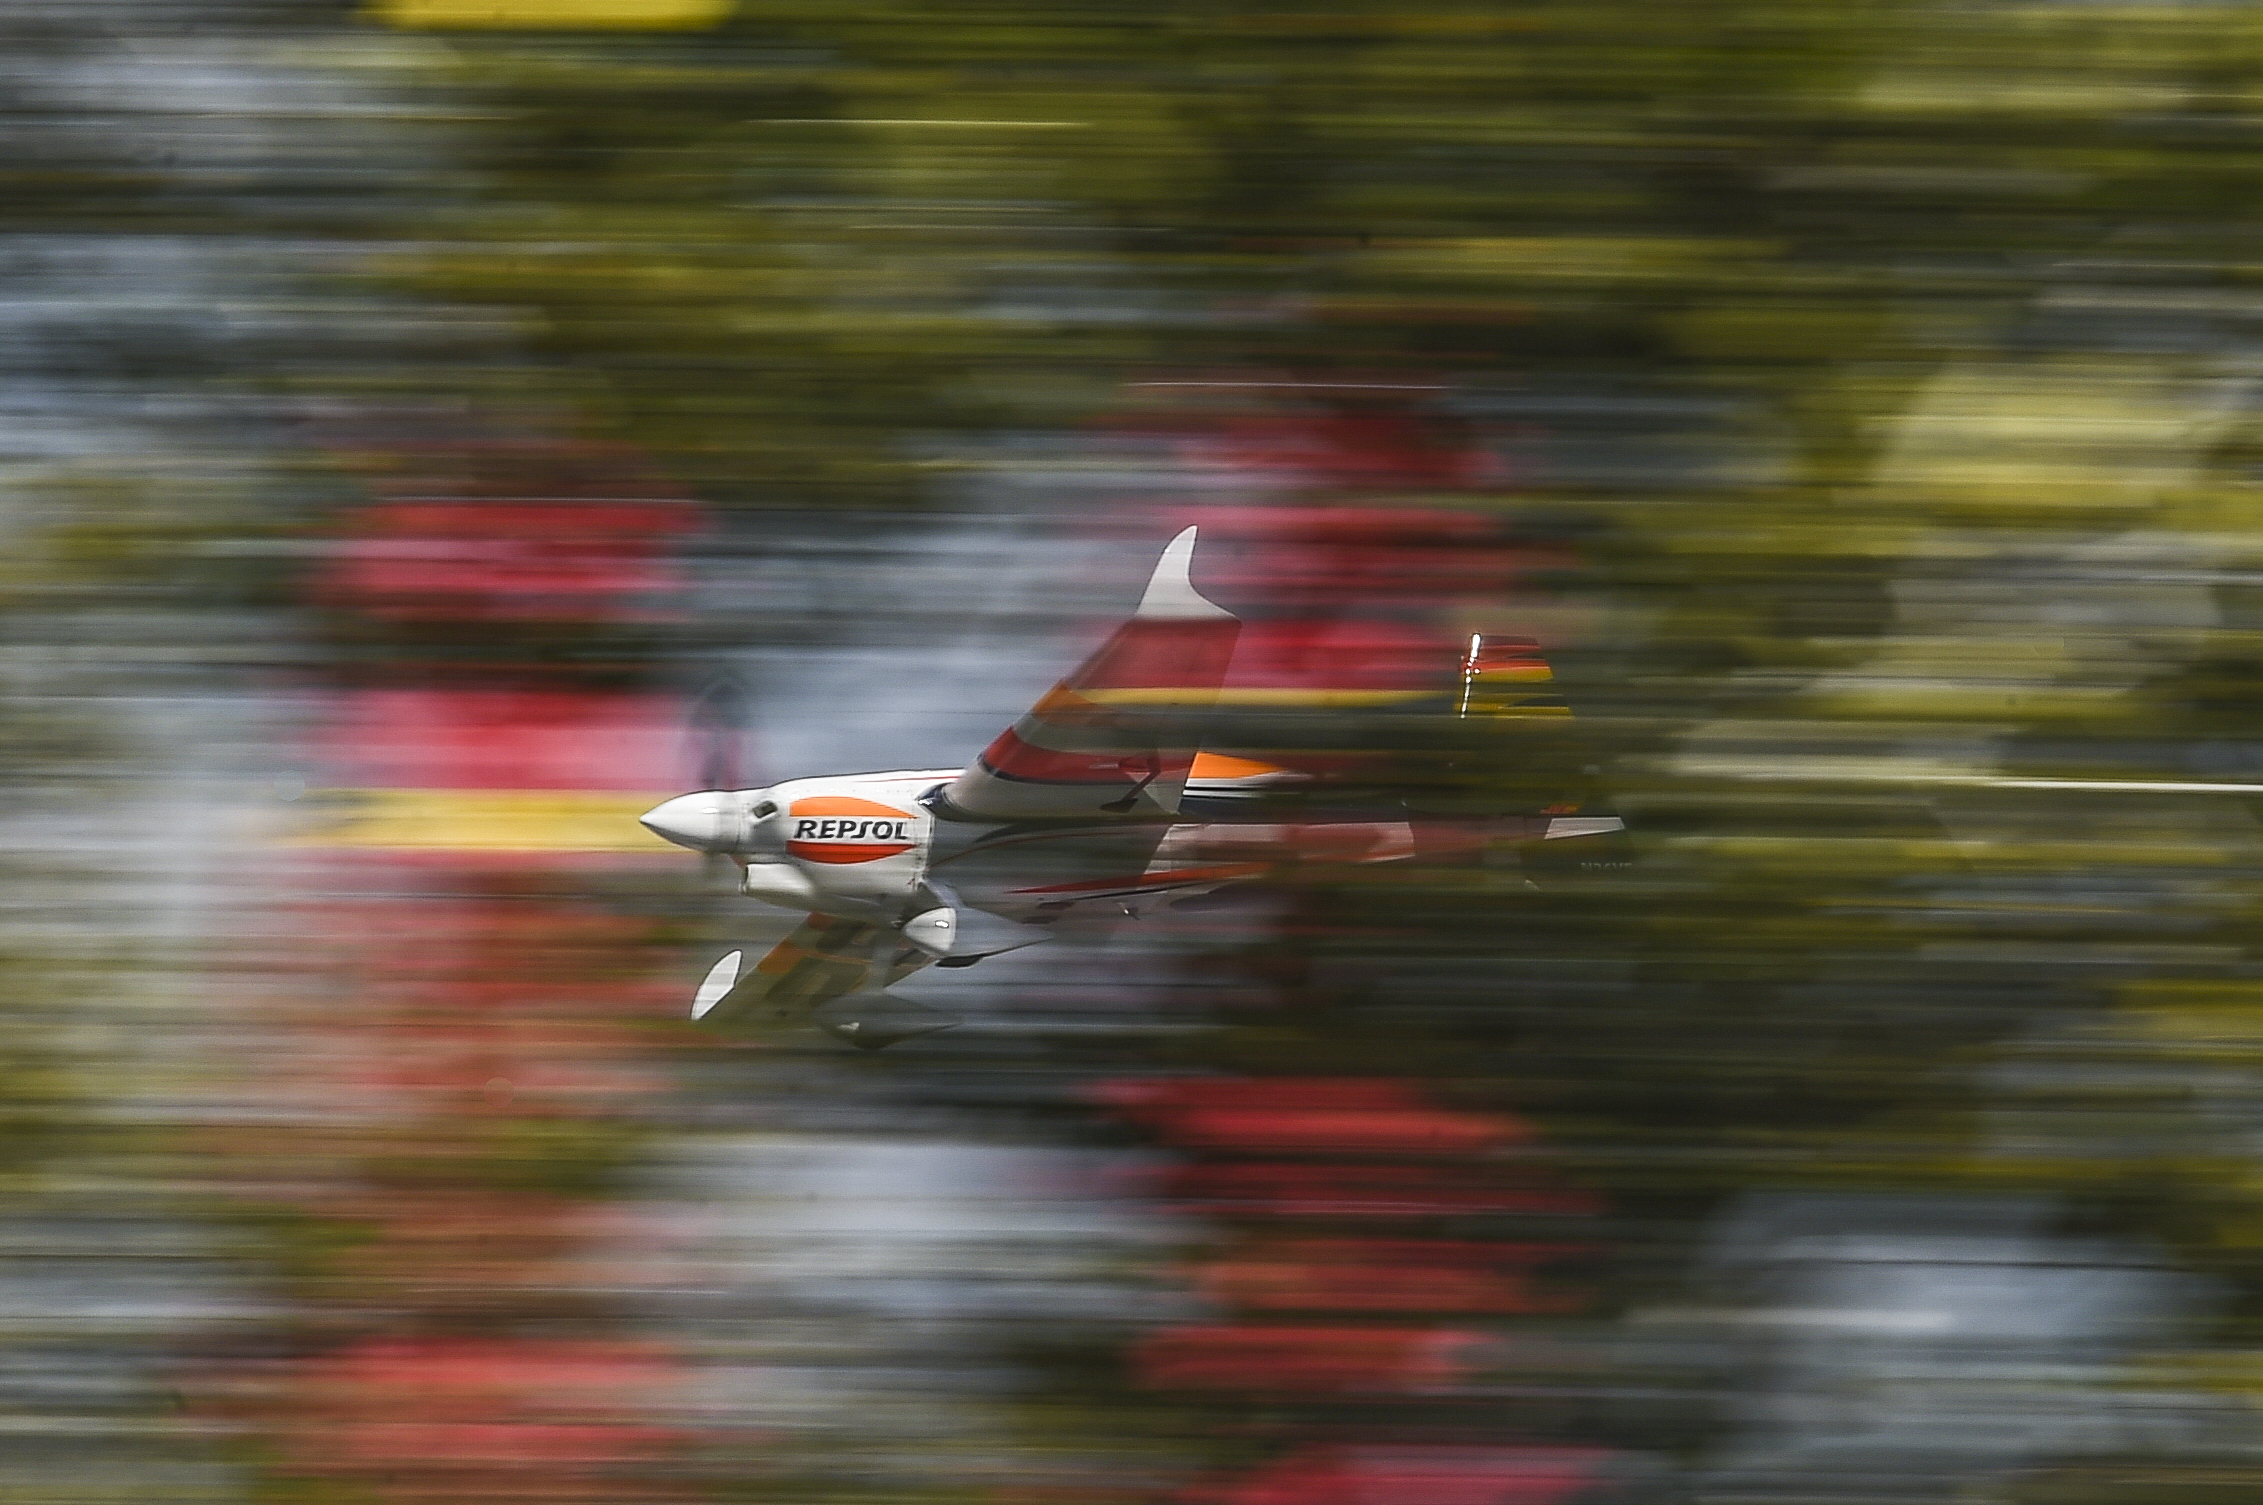  Juan Velarde soars at IMS during the Red Bull Air Race.     